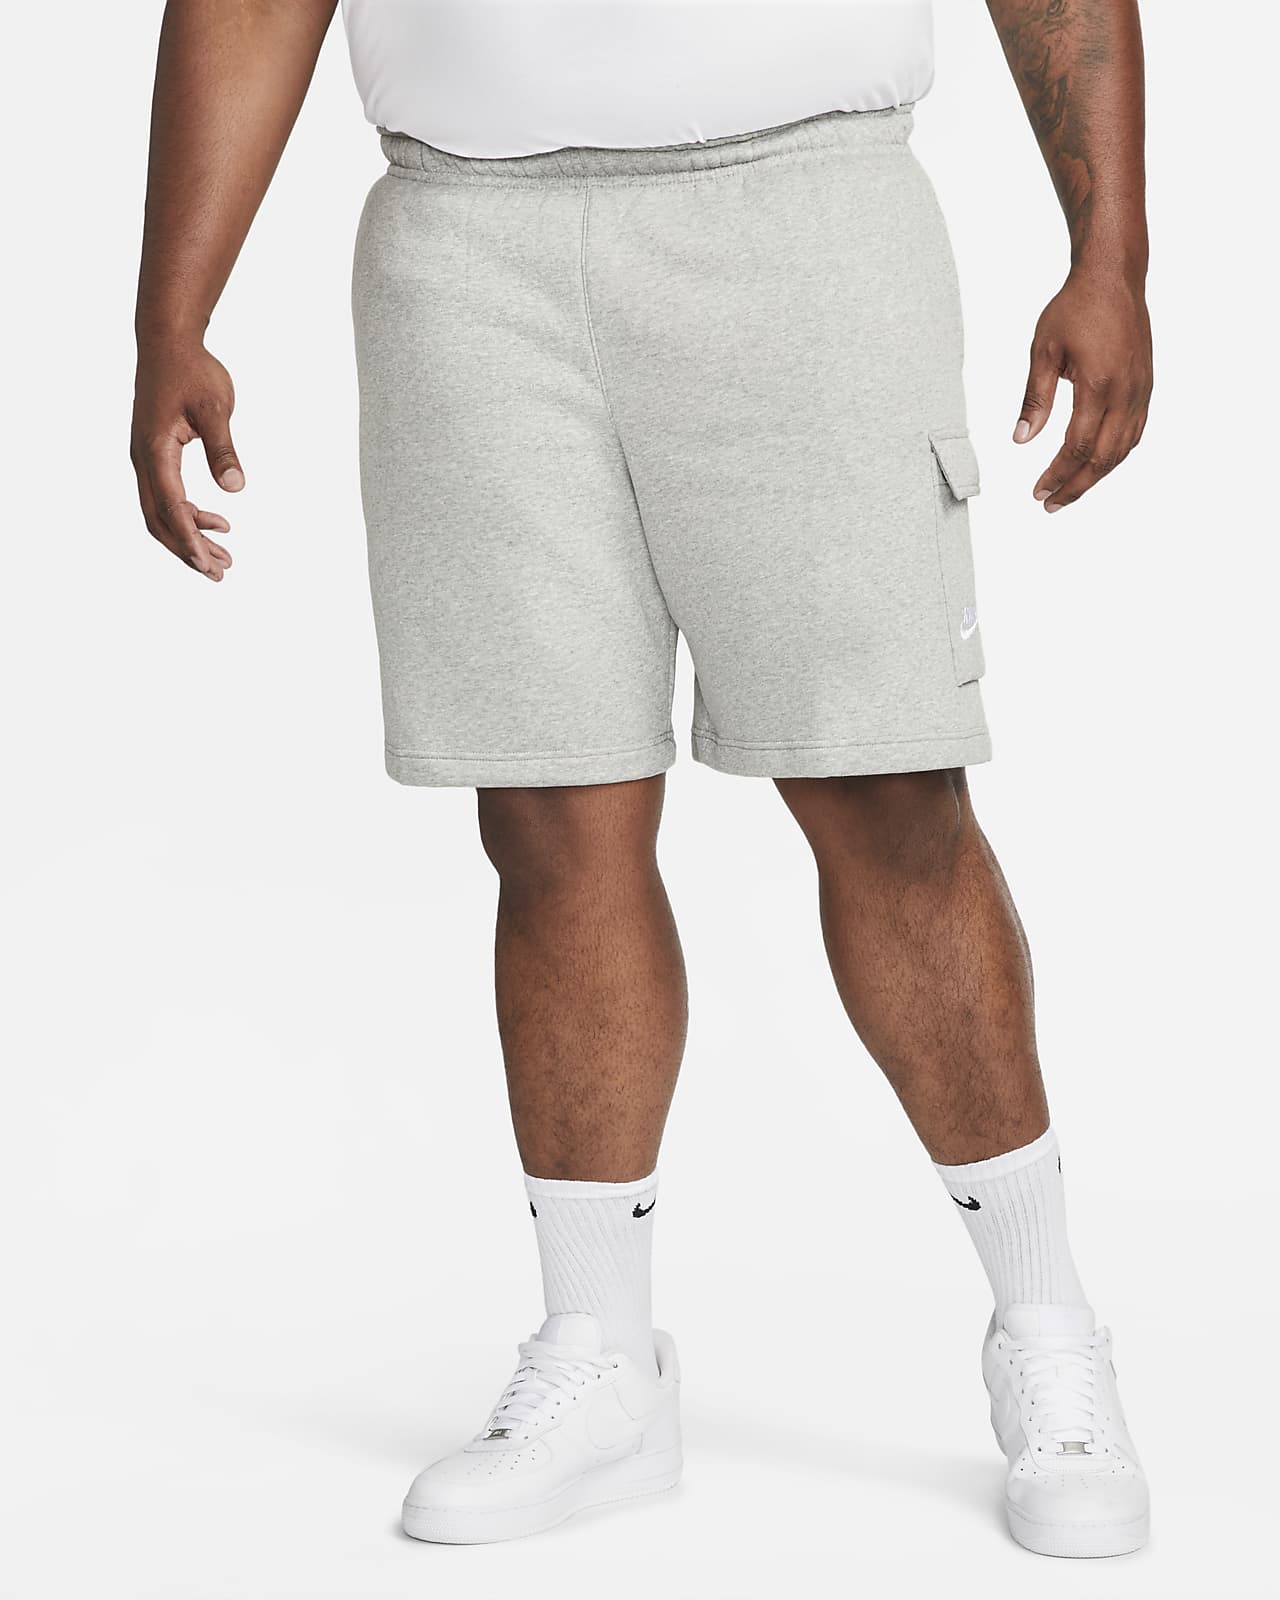 Nike Sweat Shorts -  Canada